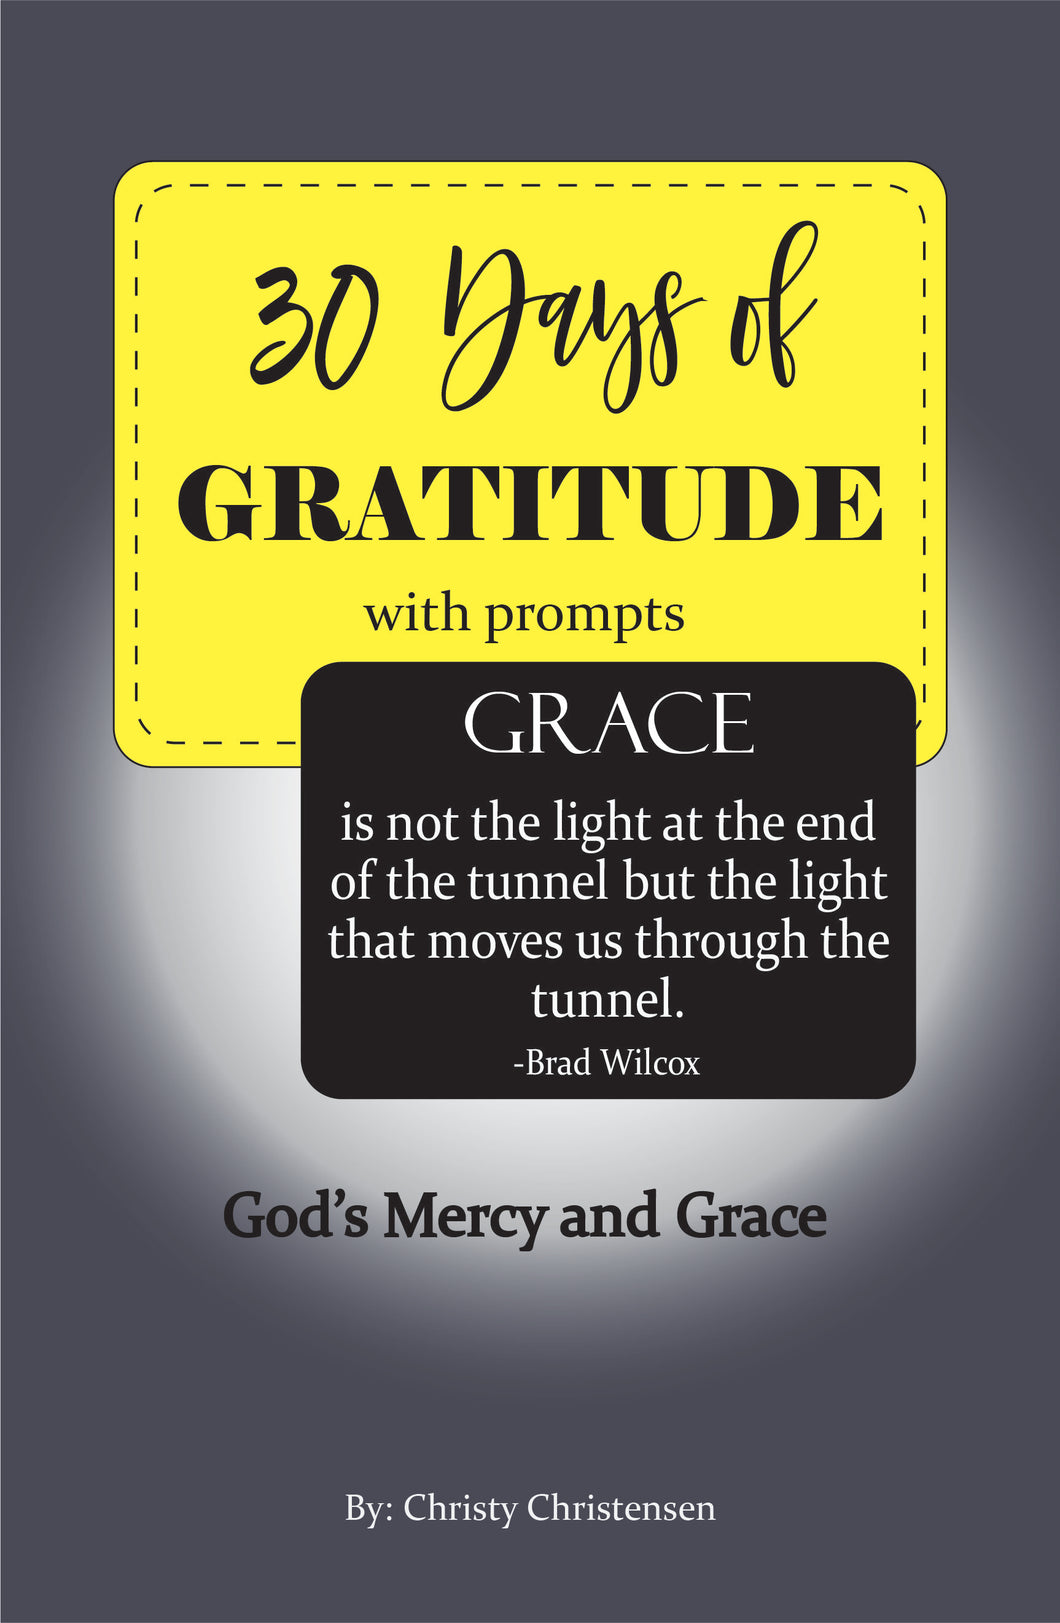 30 Day Christ Centered Gratitude Journal (Non-subscription)